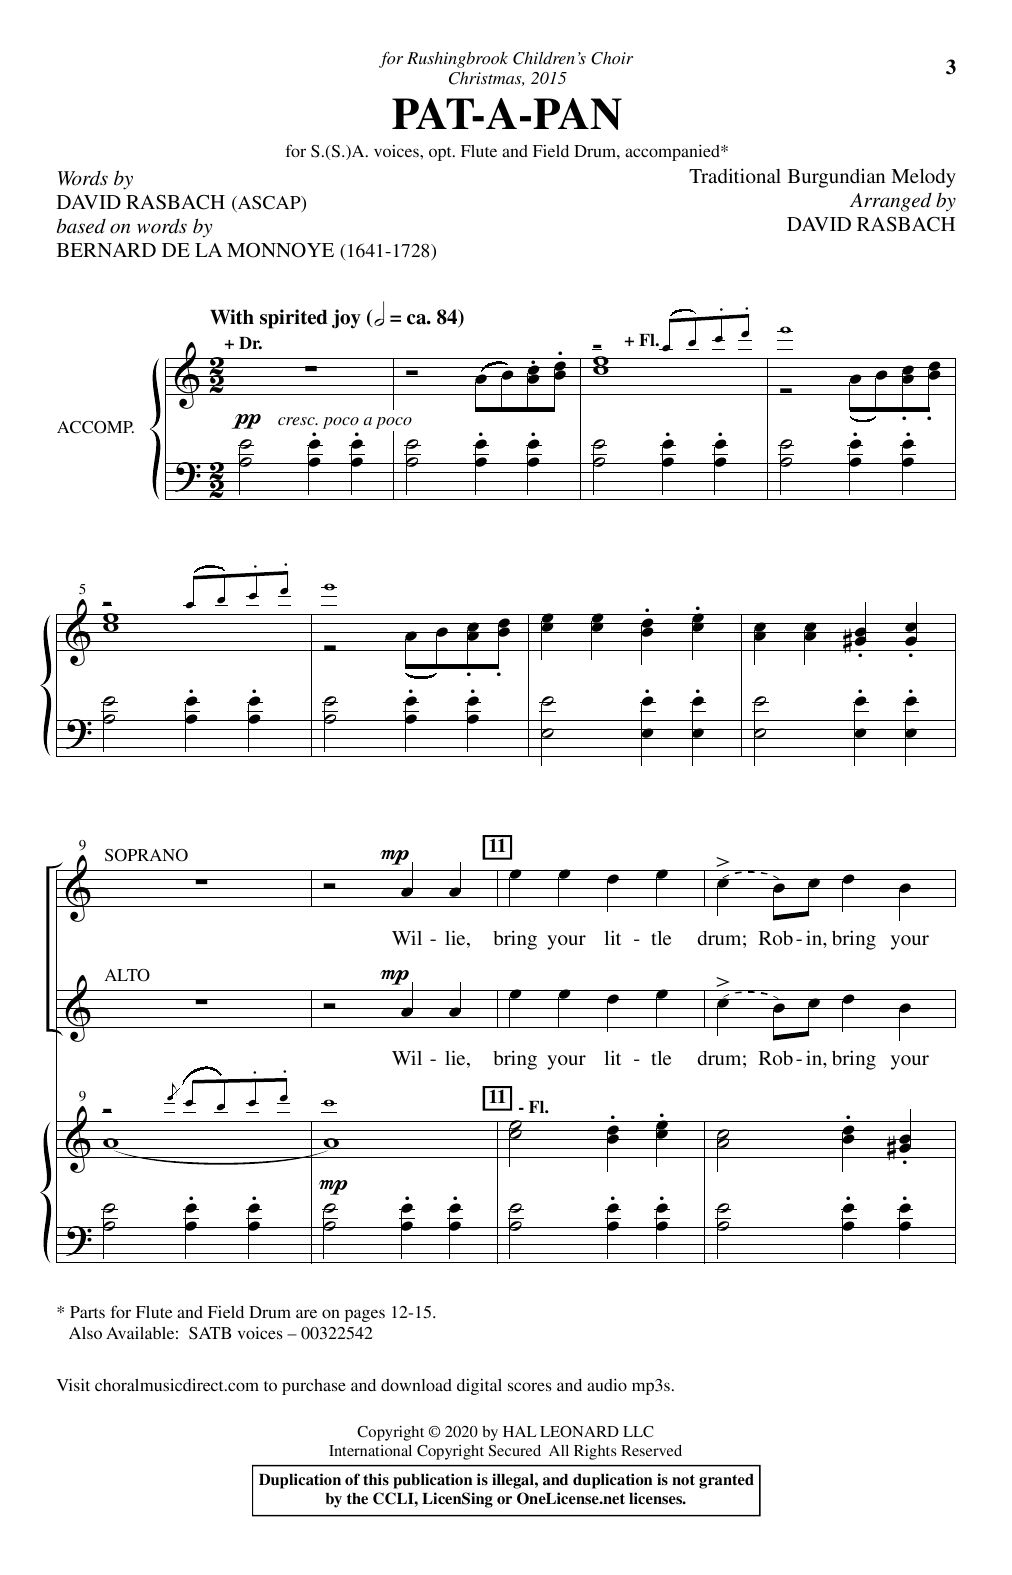 Traditional Burgundian Melody Pat-A-Pan (arr. David Rasbach) Sheet Music Notes & Chords for SATB Choir - Download or Print PDF